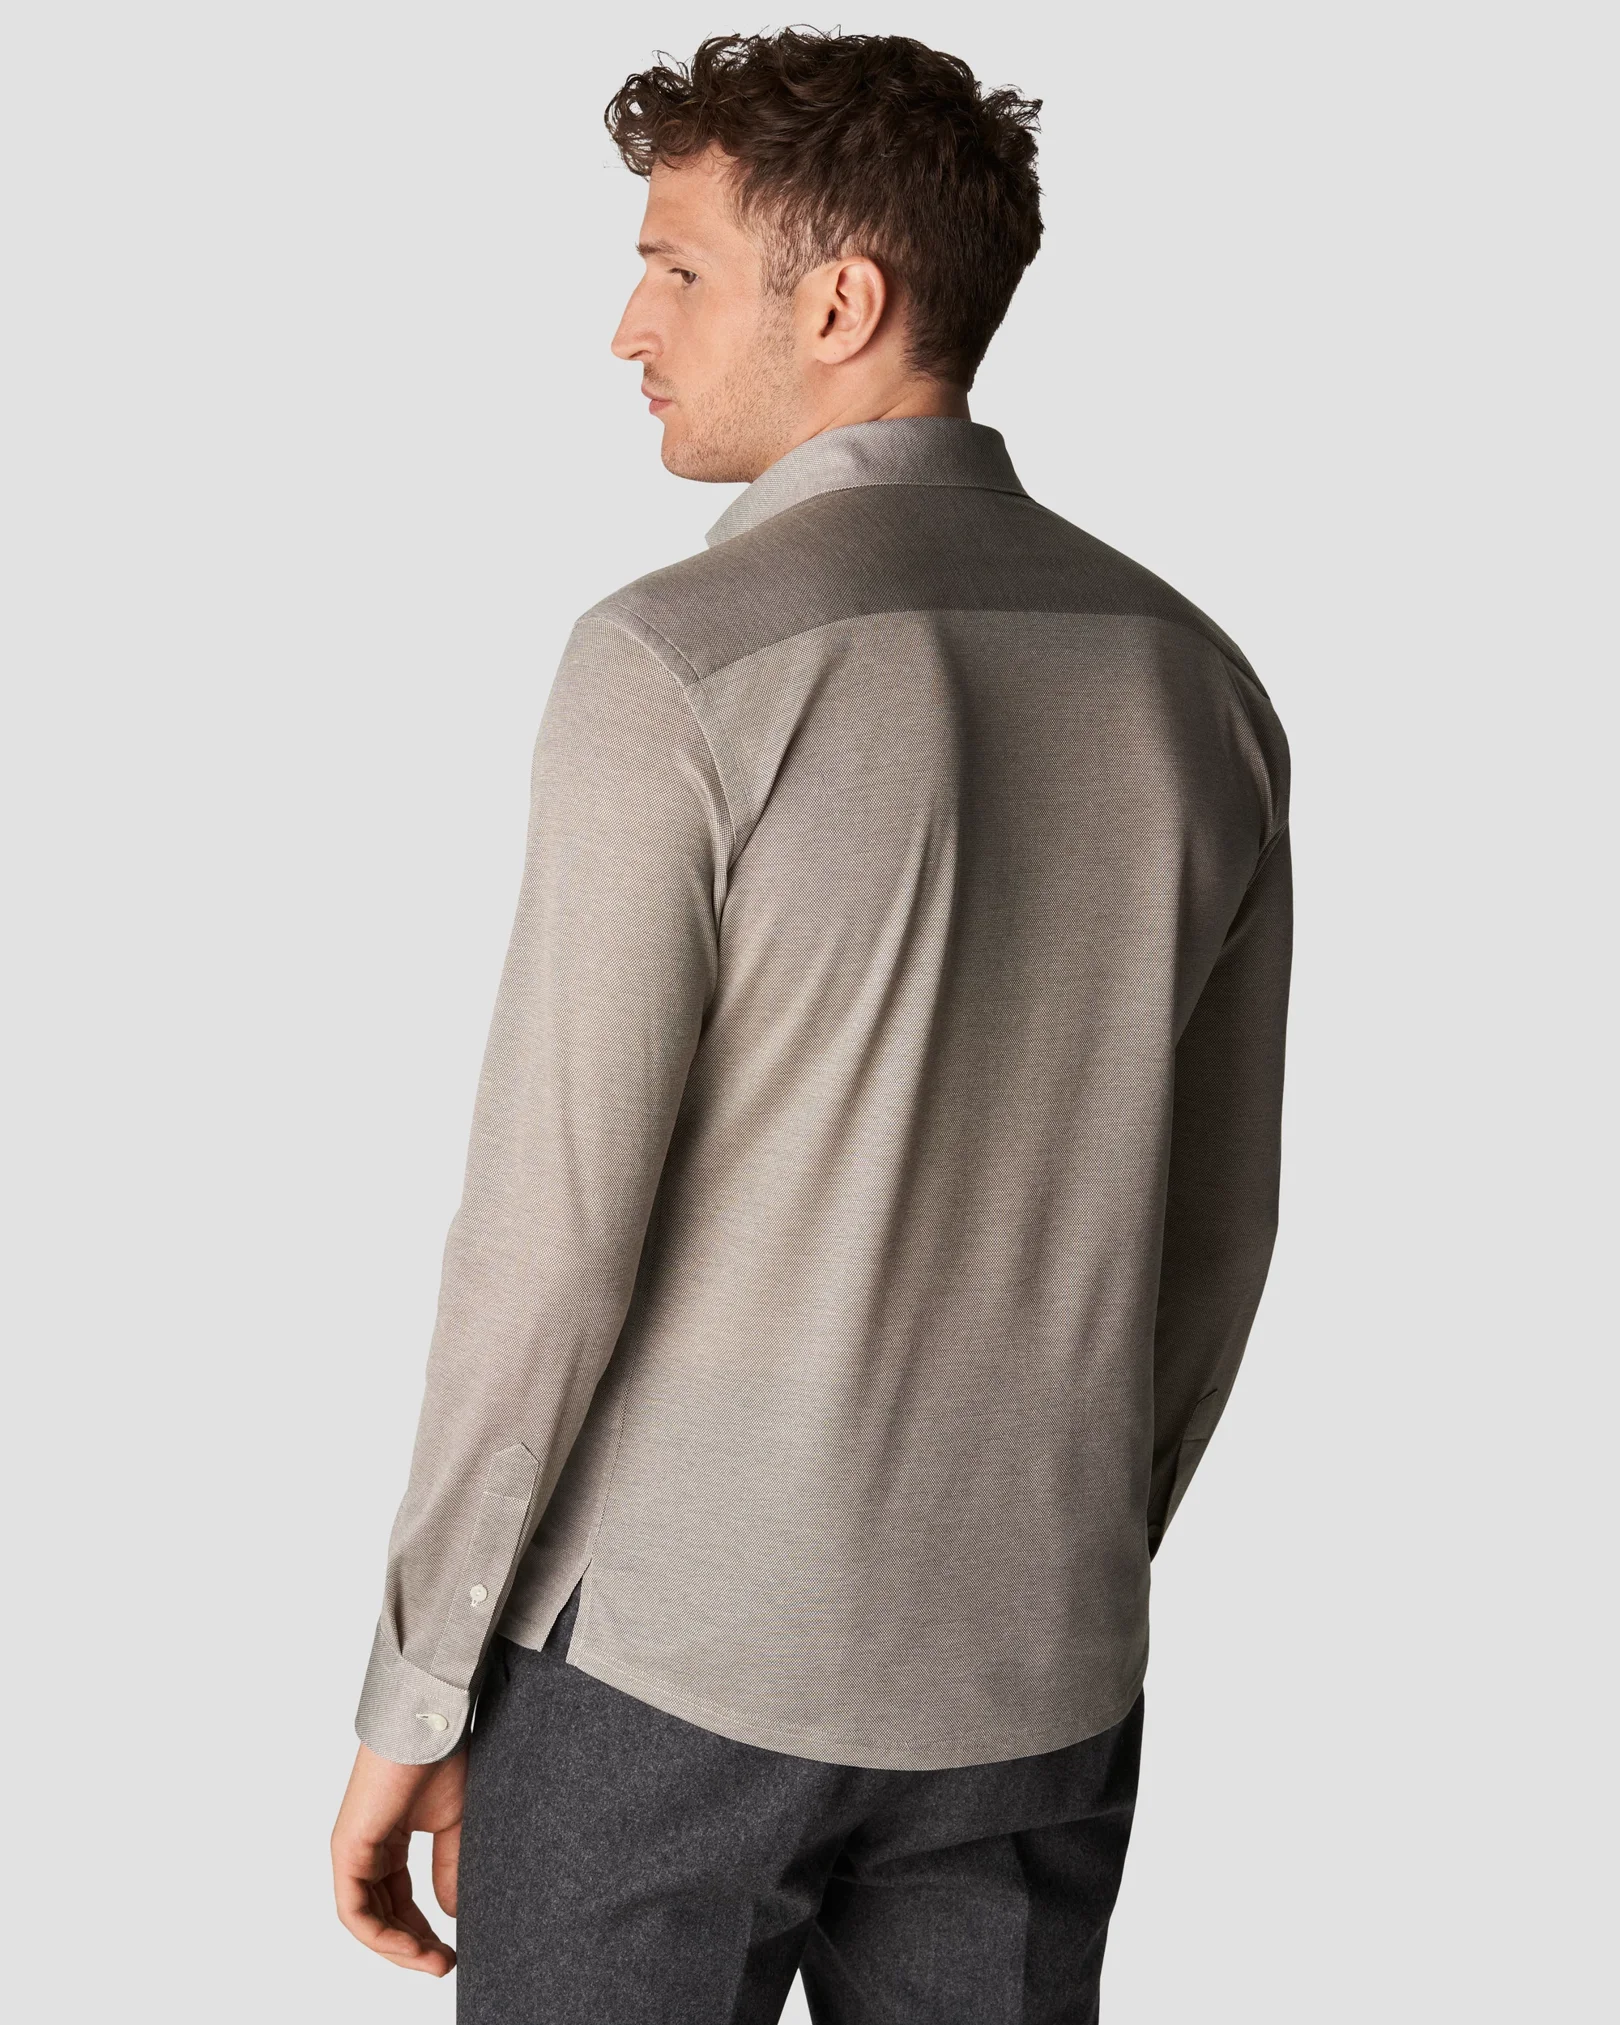 Eton - light grey jersey